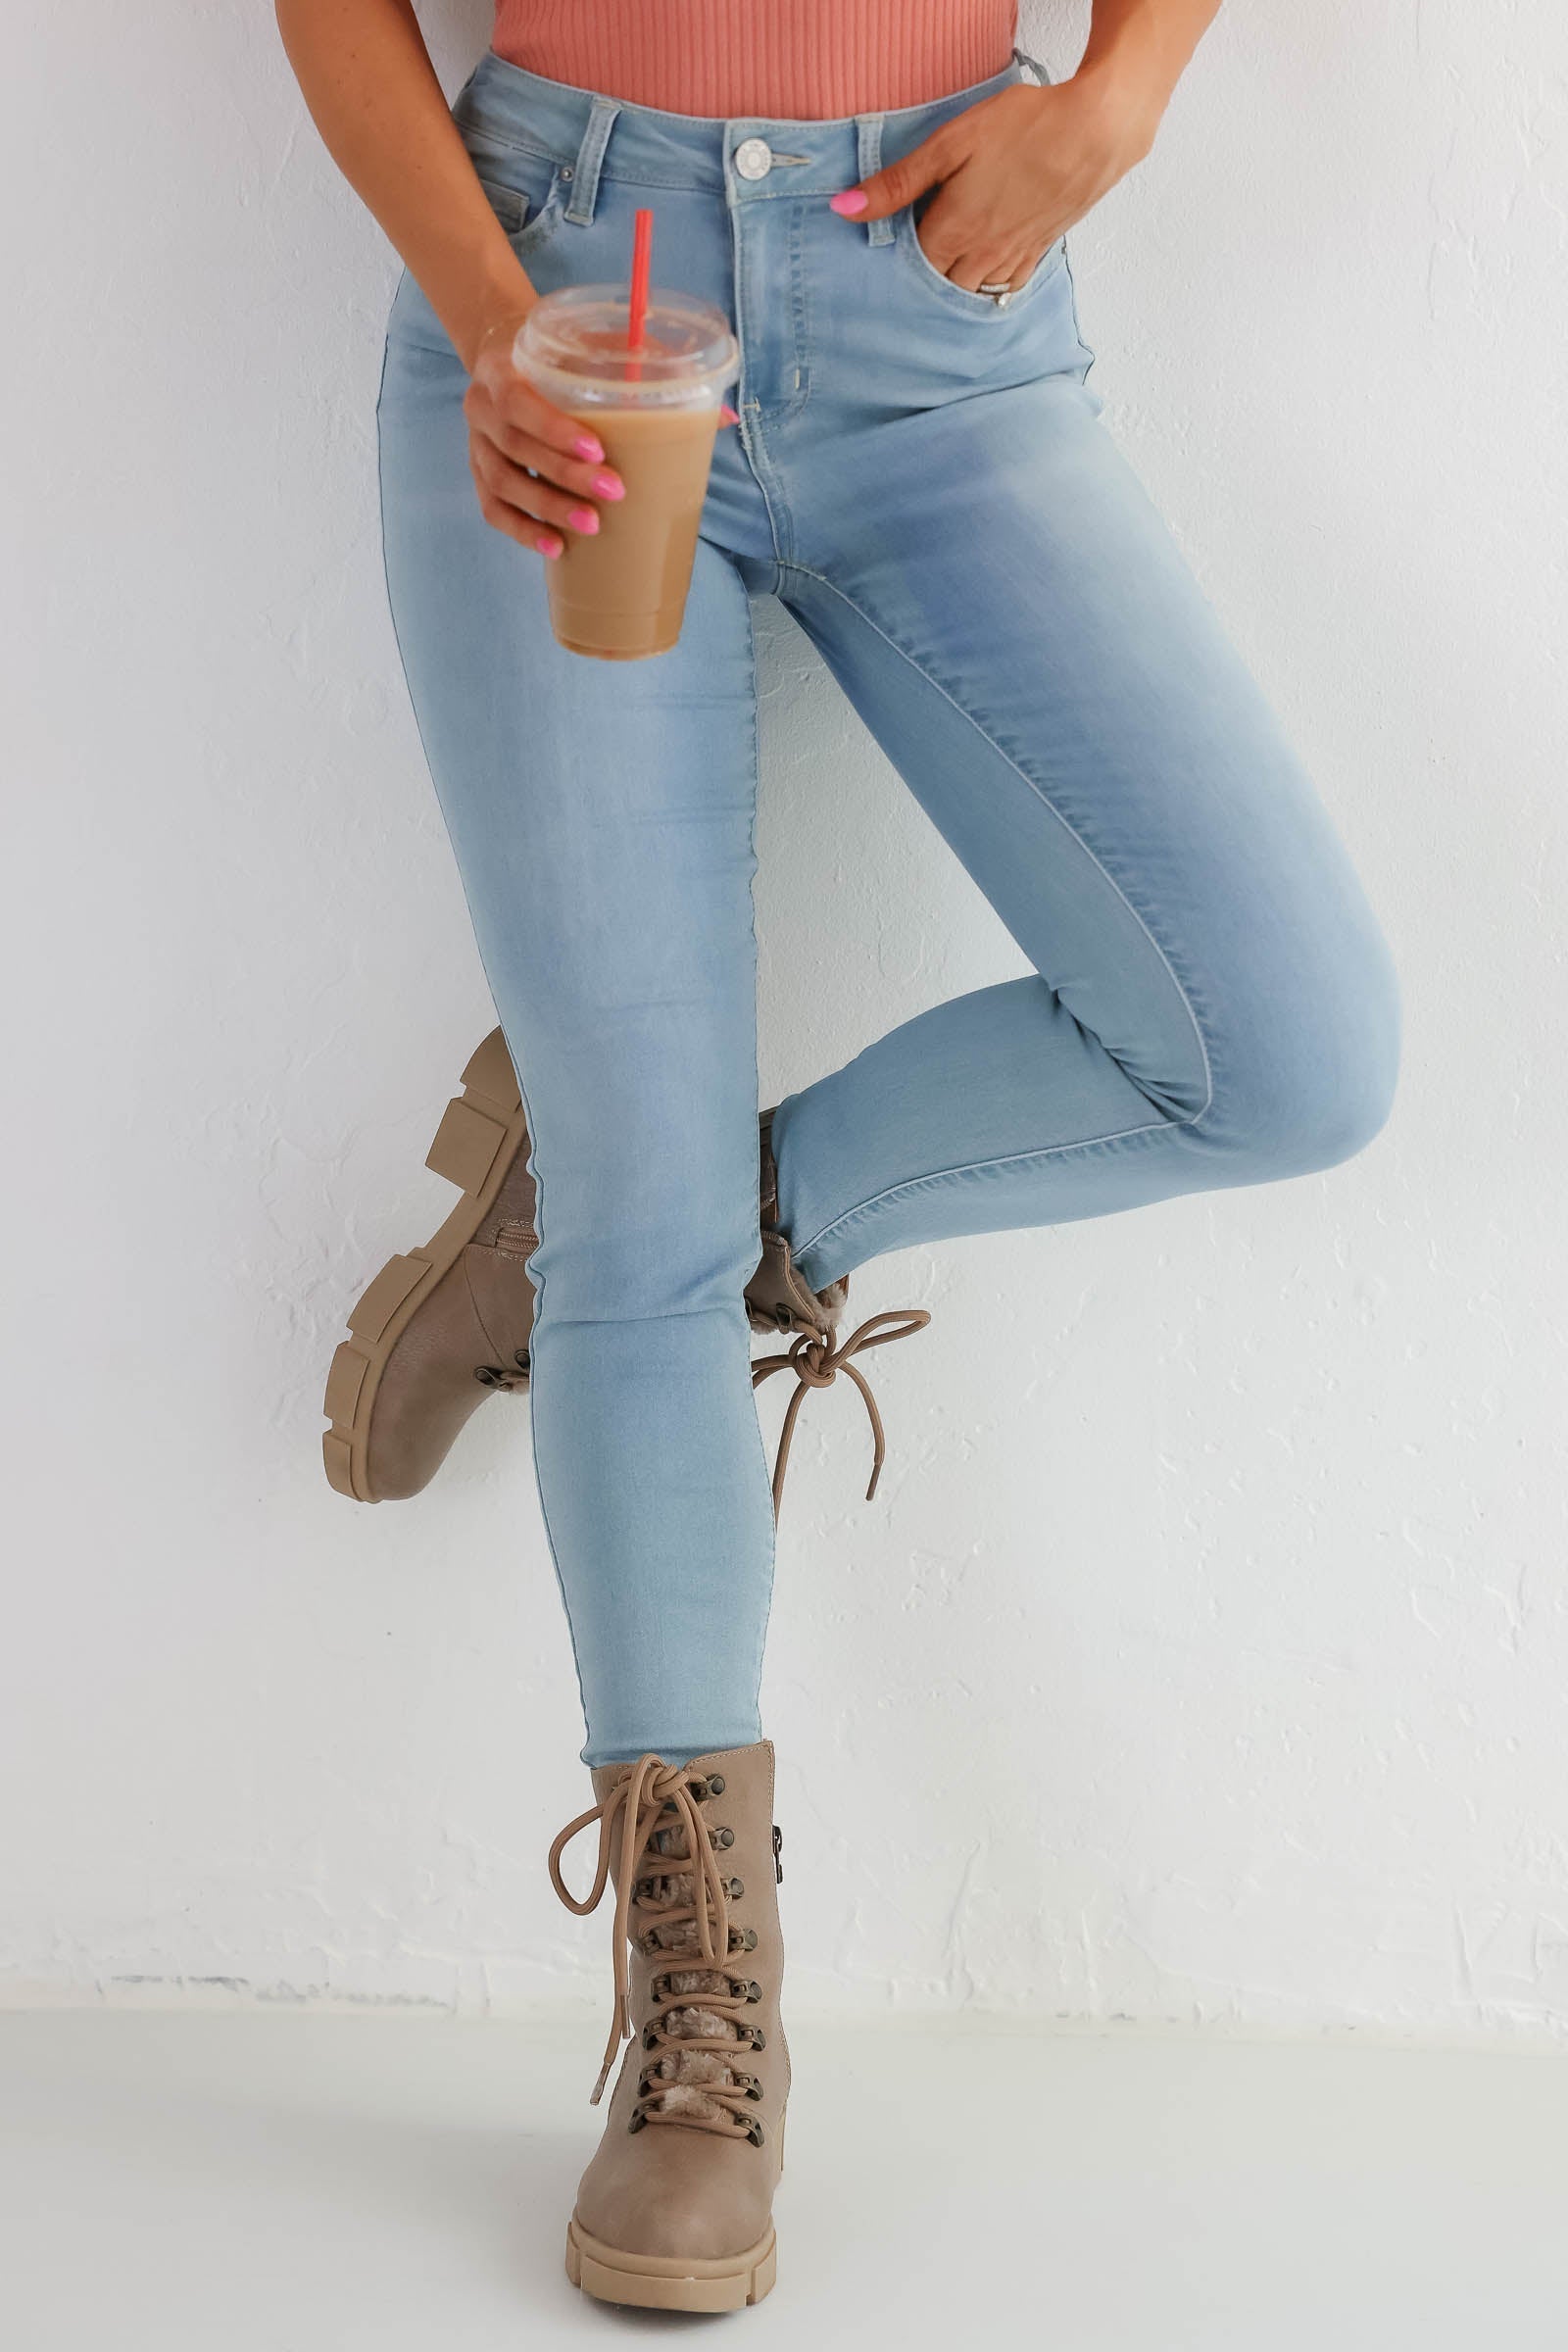 Lizzy Hyper Denim Super Stretchy Skinny Jeans - Light Wash, Closet Candy, 1